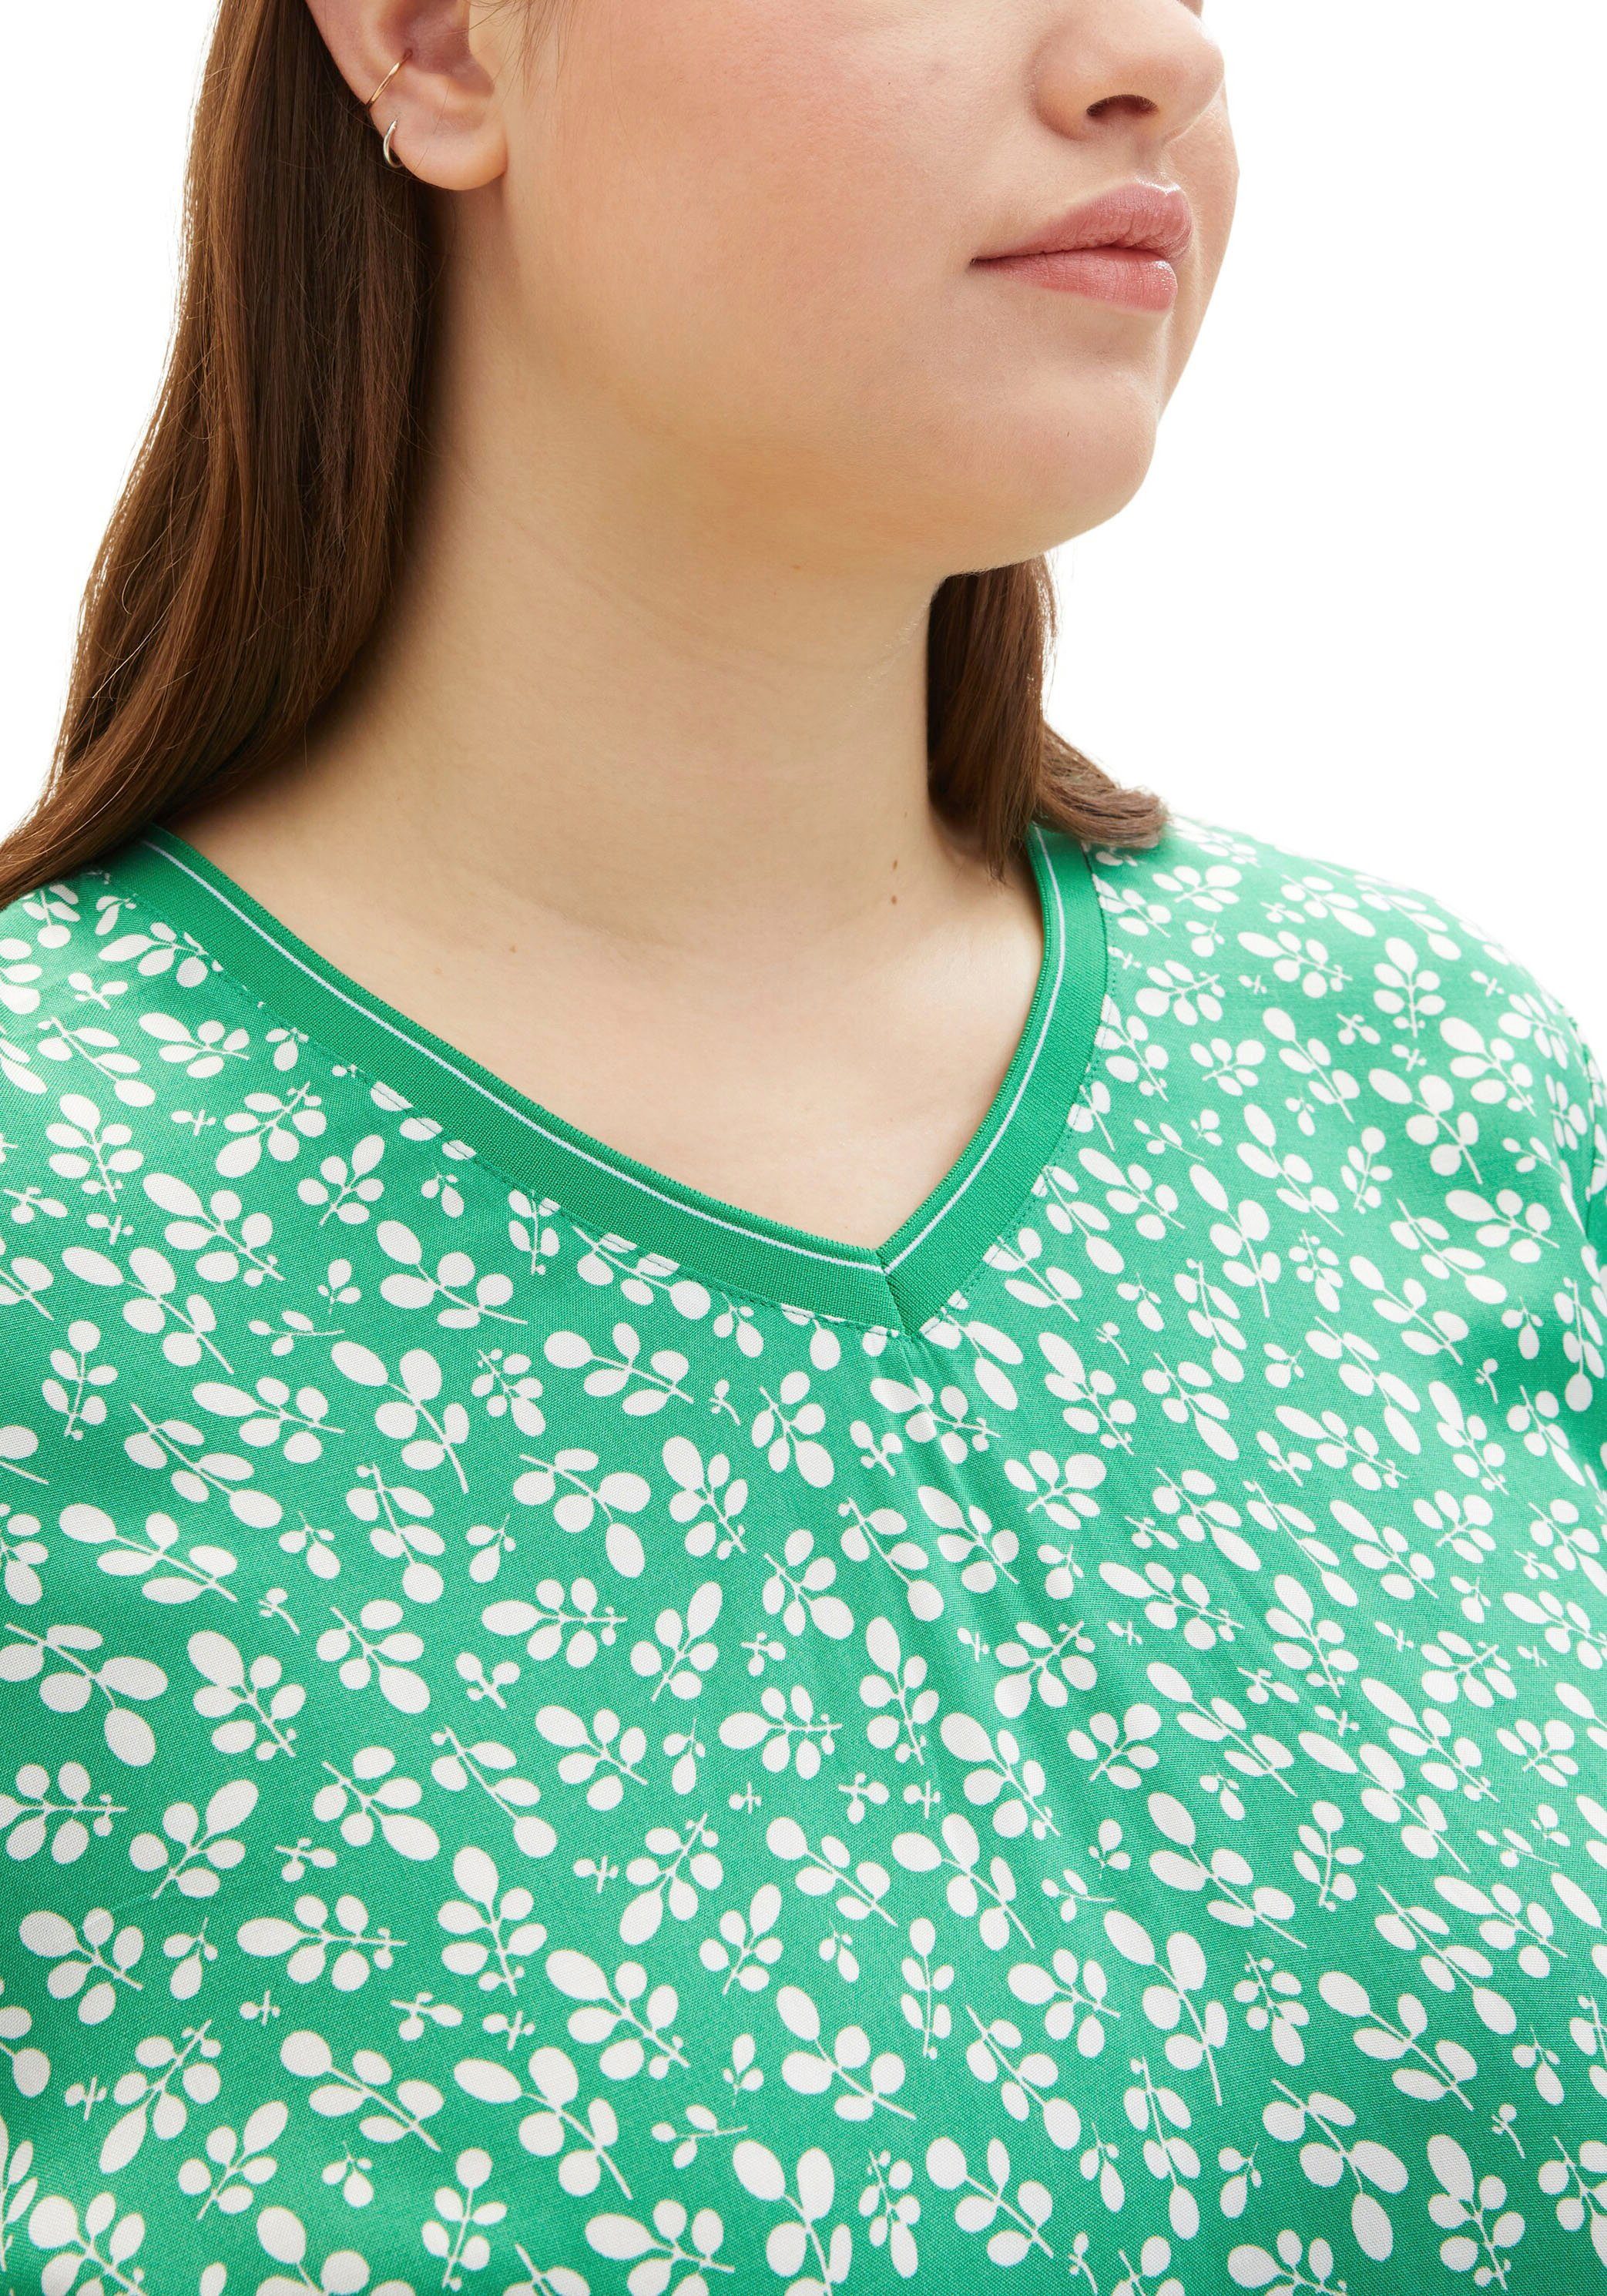 TOM TAILOR PLUS 3/4-Arm-Shirt Muster mit weiß floralem geblümt grün